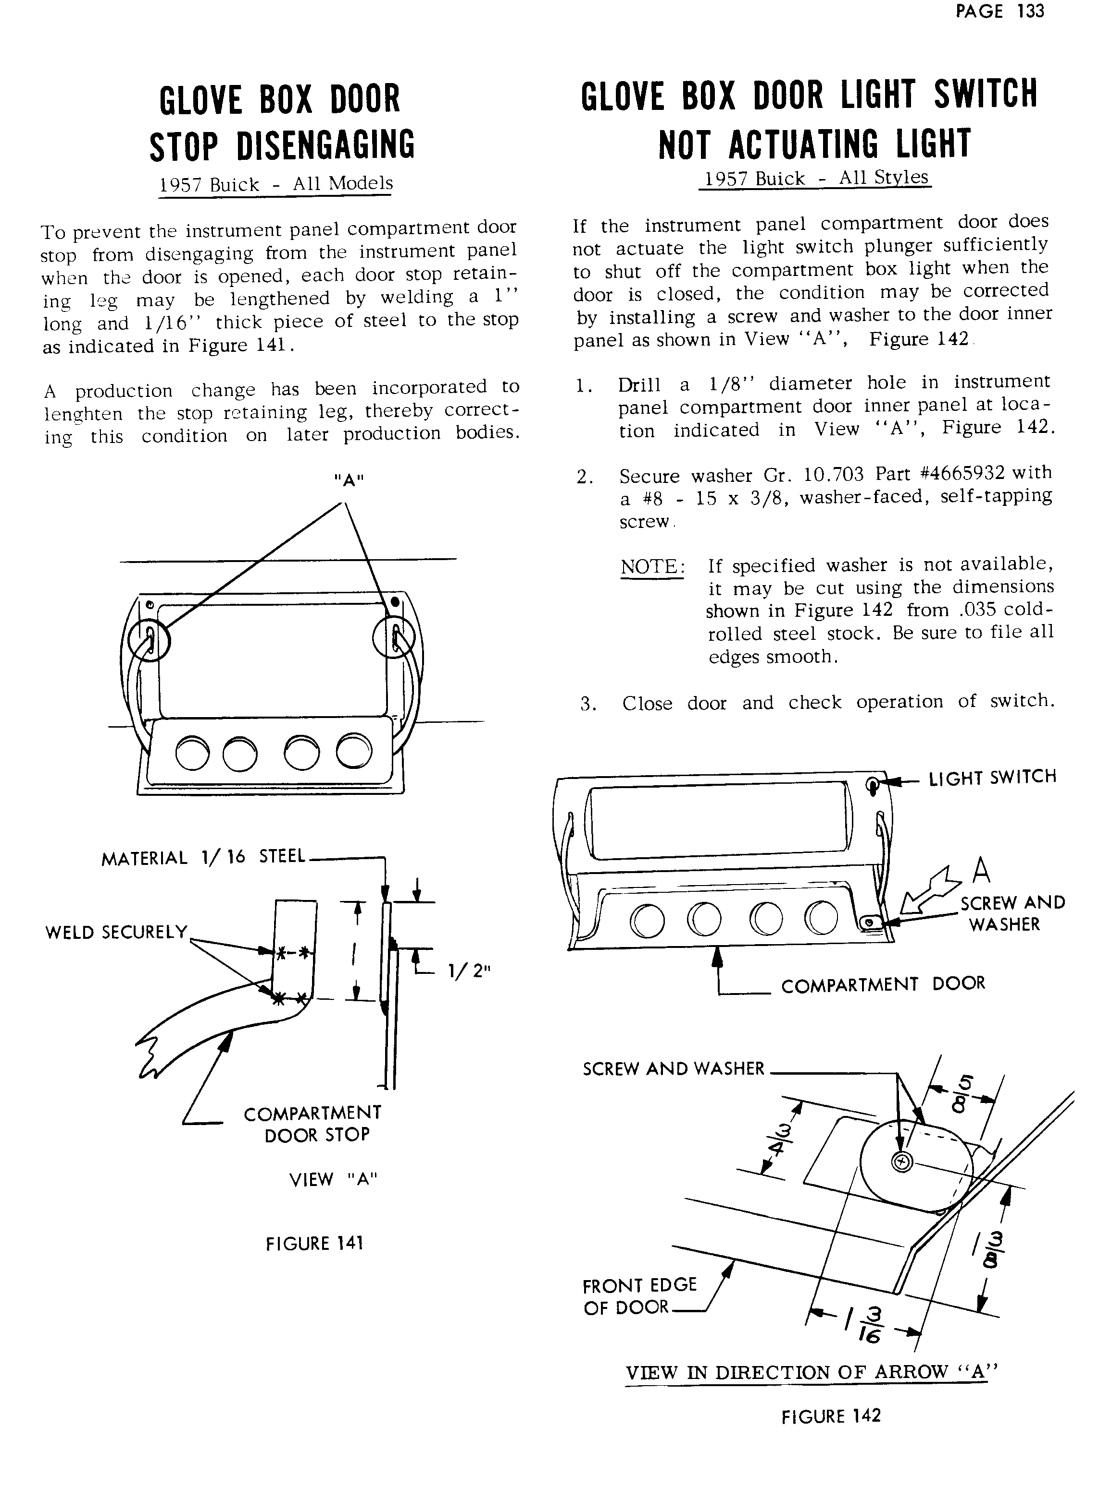 n_1957 Buick Product Service  Bulletins-134-134.jpg